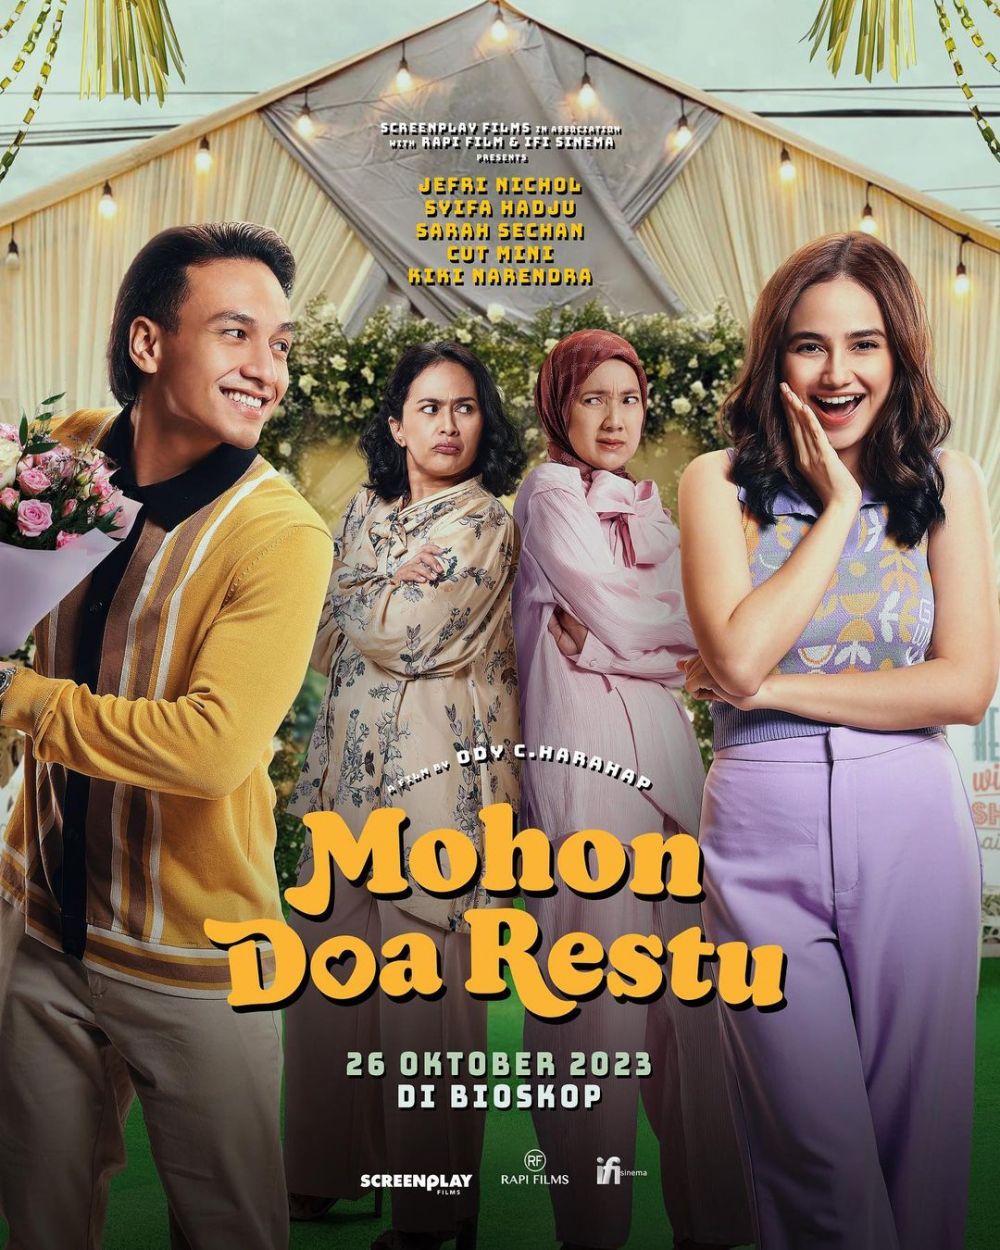 Film Mohon Doa Restu, drama calon pengantin dan mertua yang disebut relatable